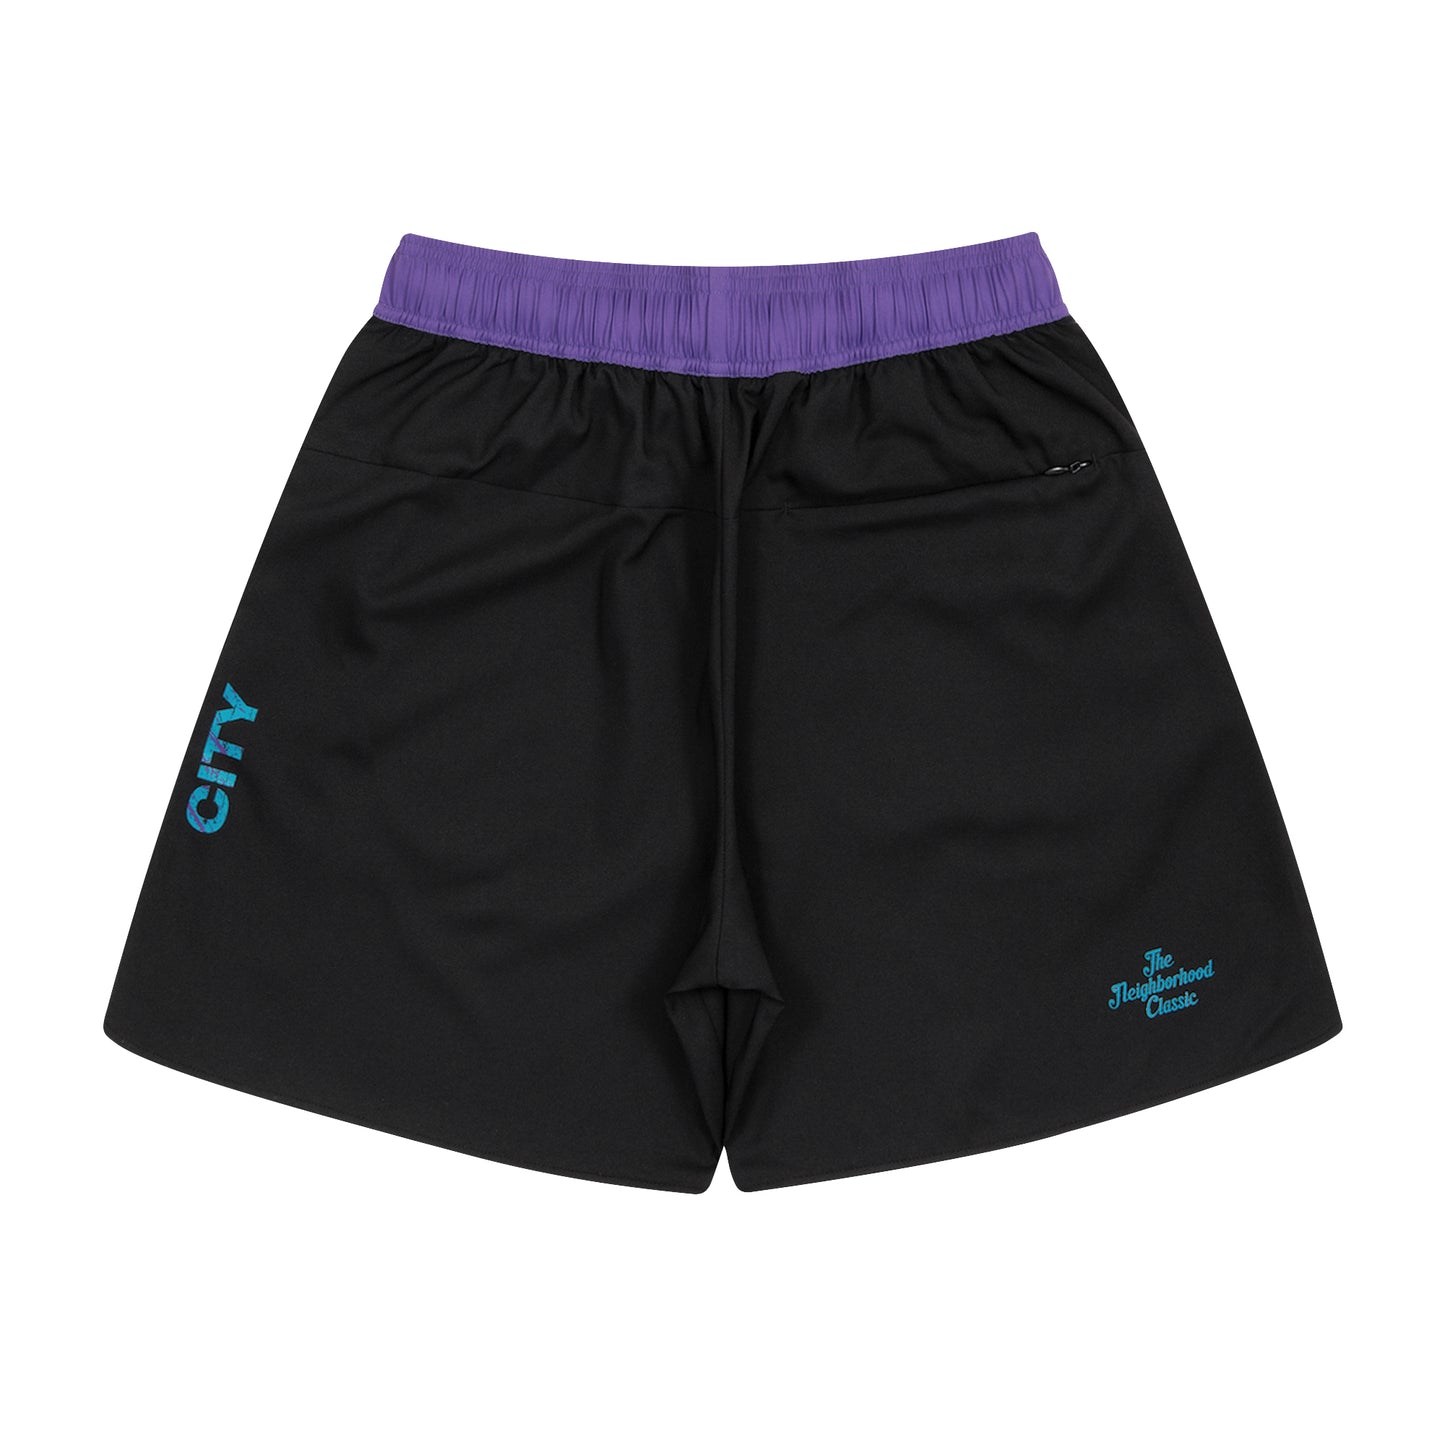 The Neighborhood Classic Zip Shorts (black/purple)